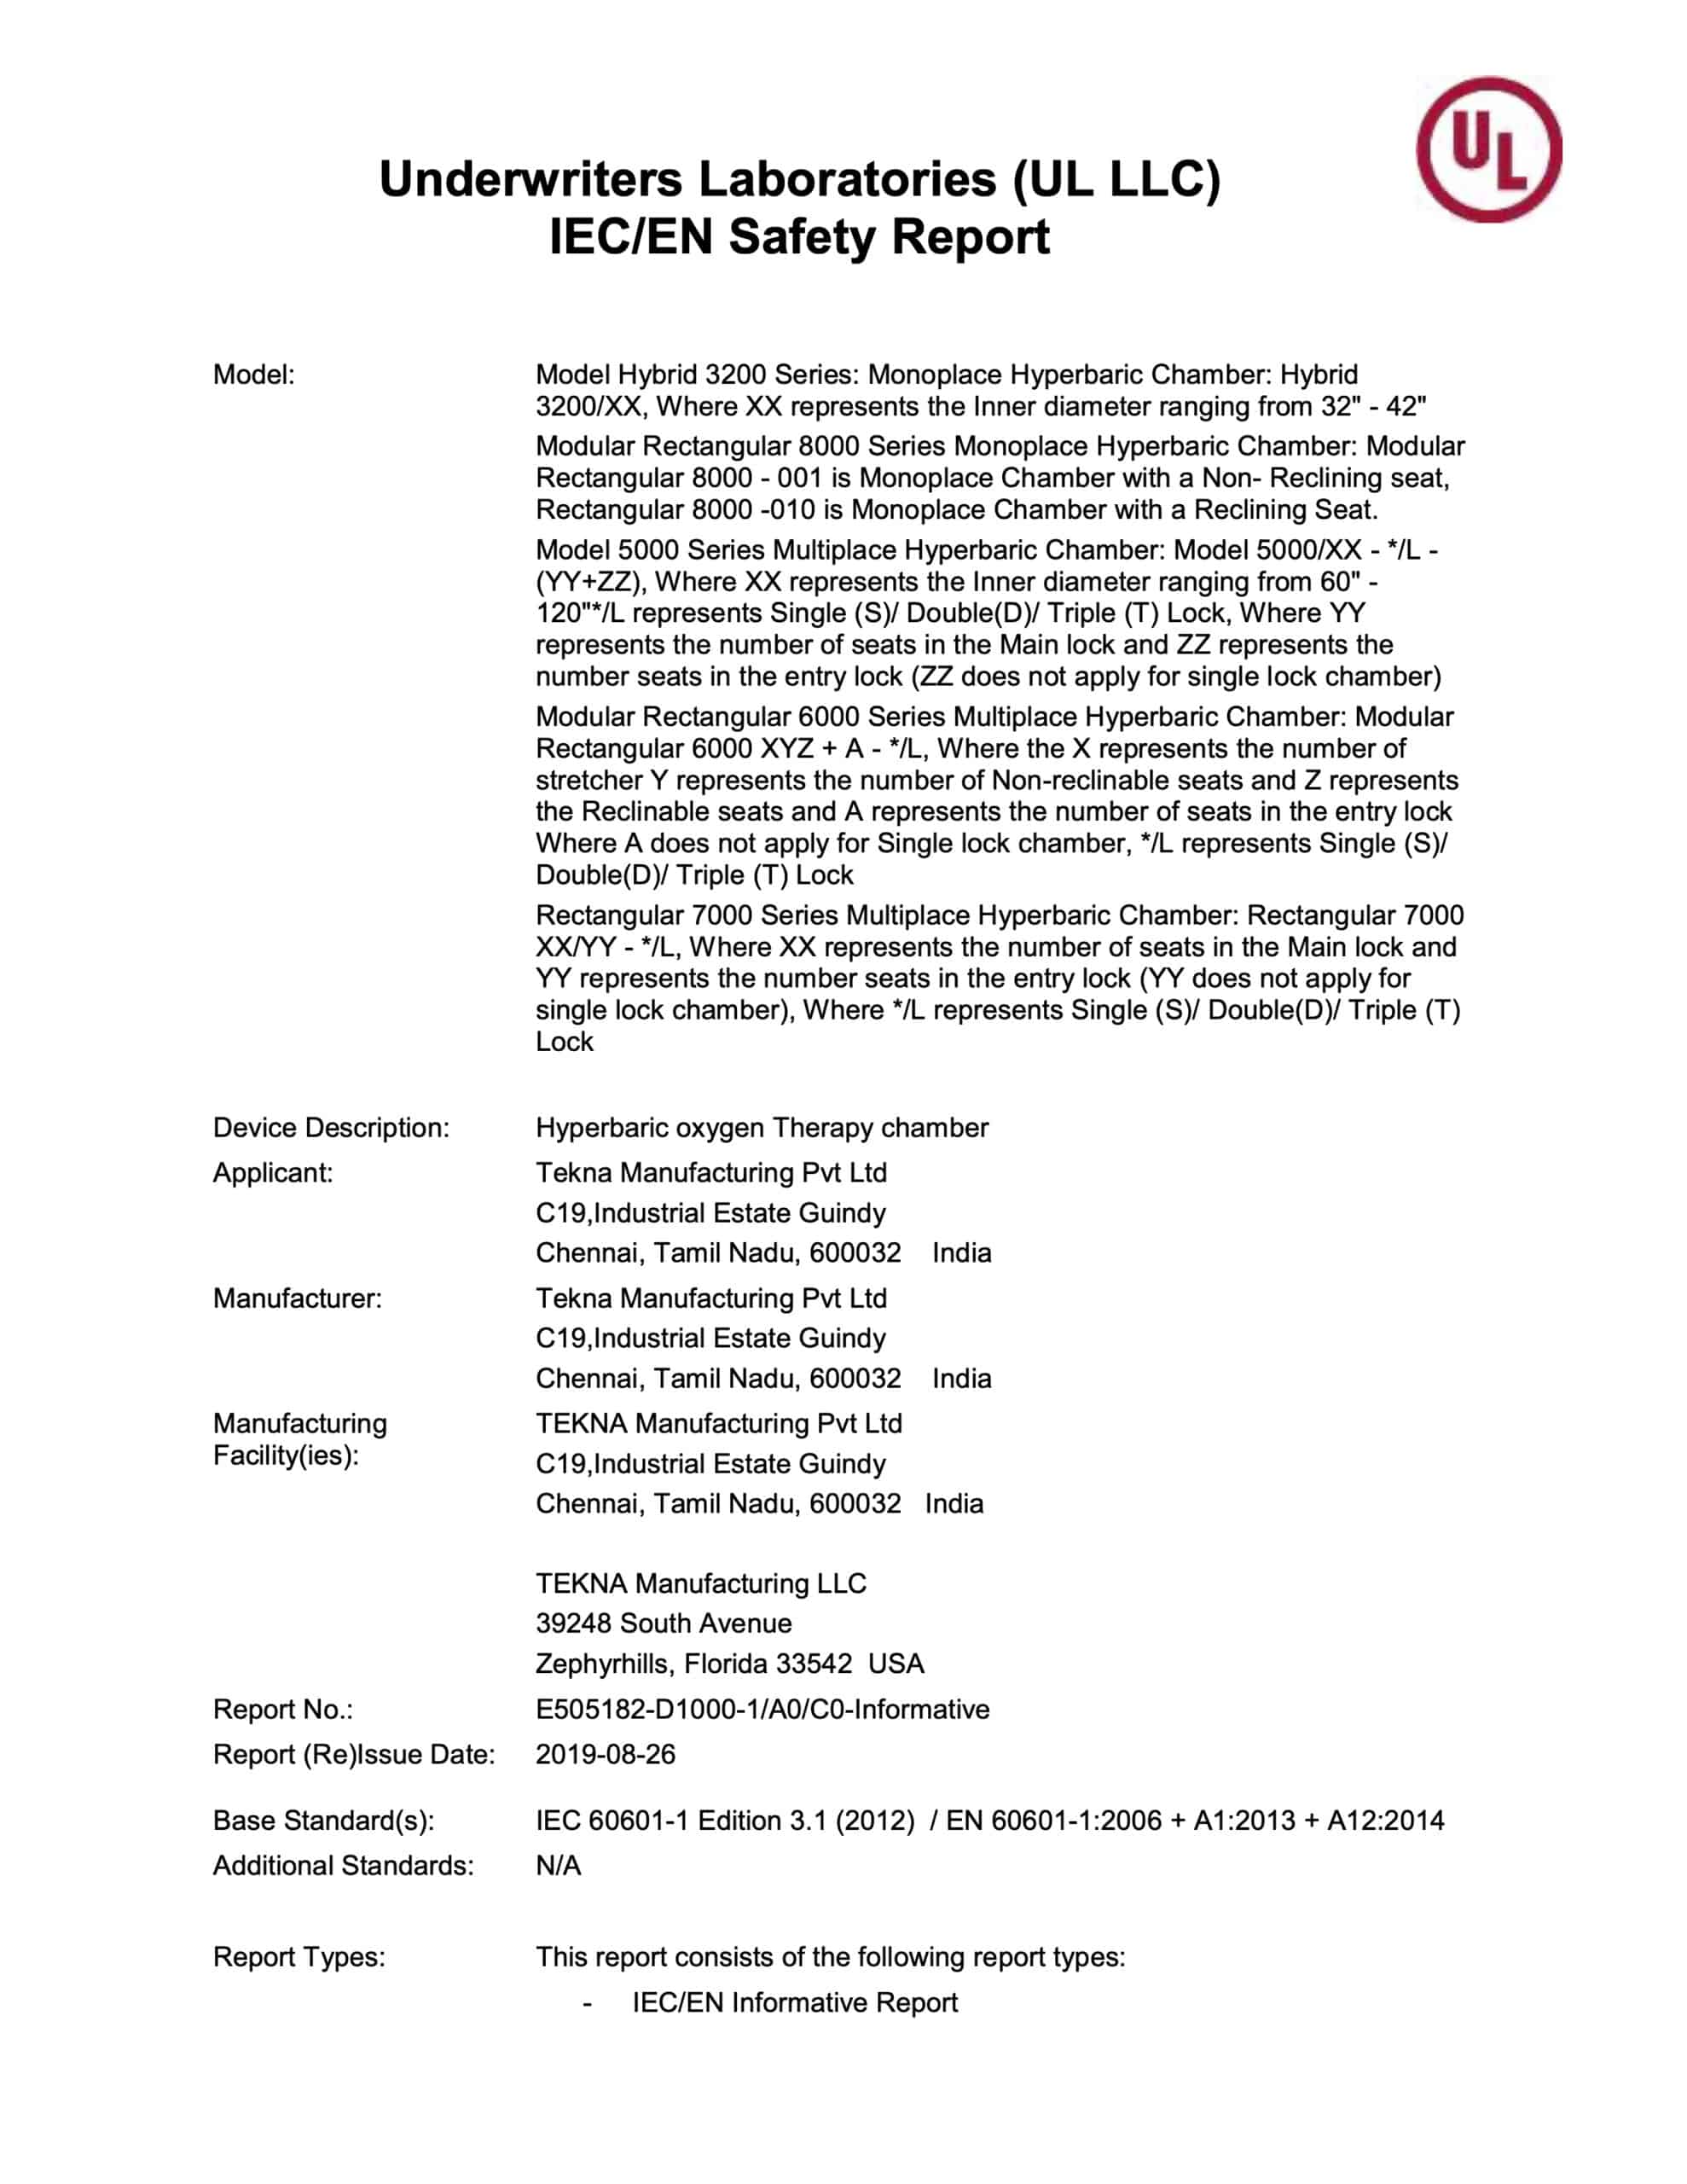 Hyperbaric Chamber IEC 60601-1 Report